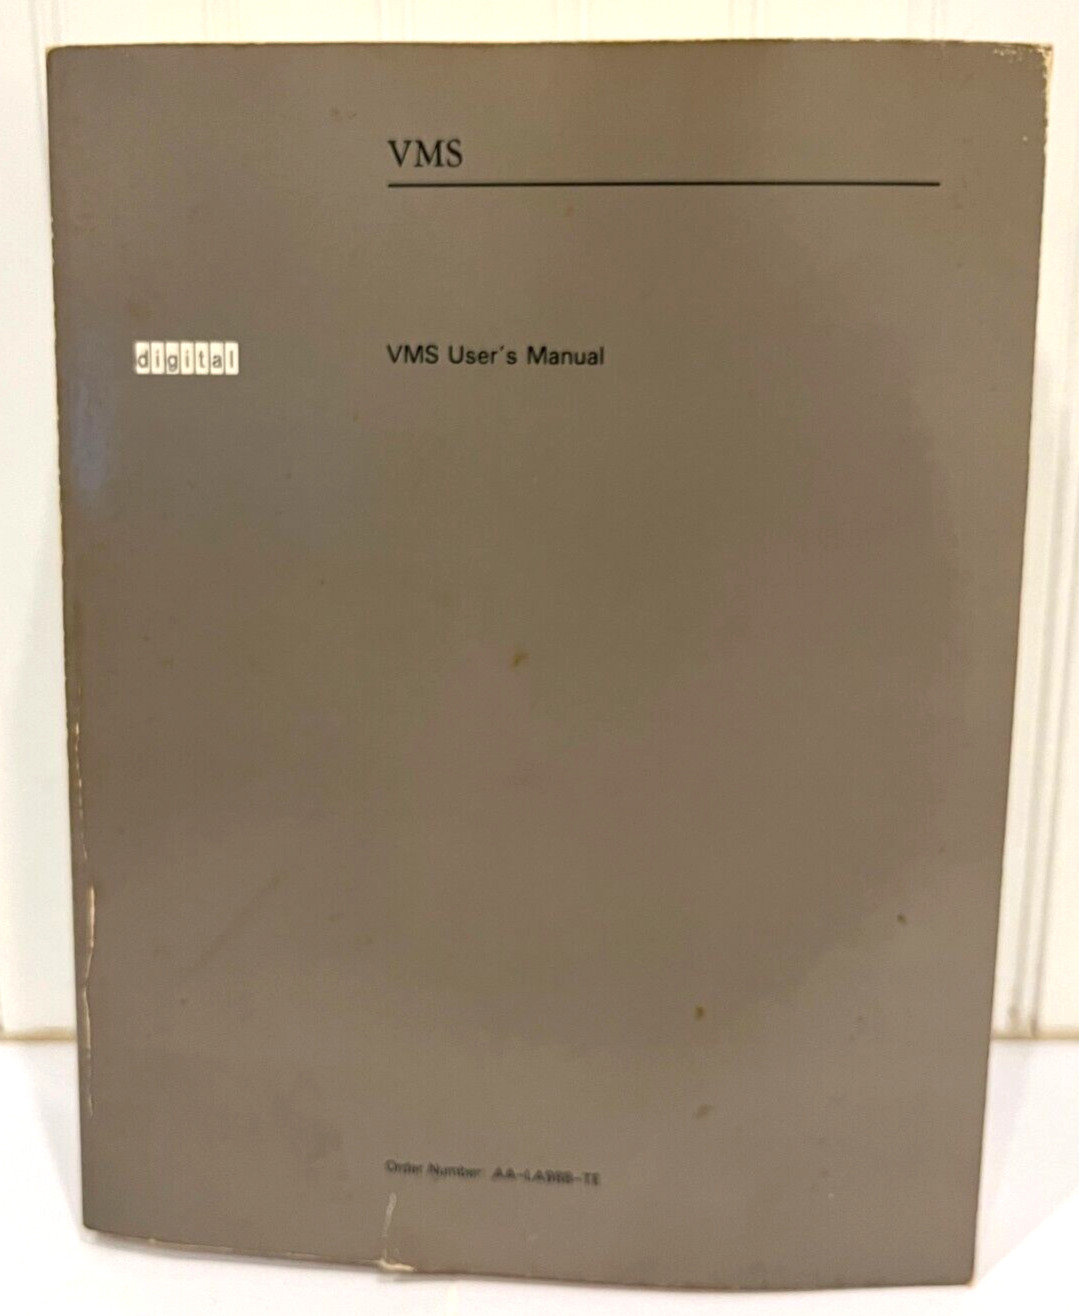 Vintage Digital Equipment Corporation DEC VMS User's Manual Ver. 5.2 - June 1989